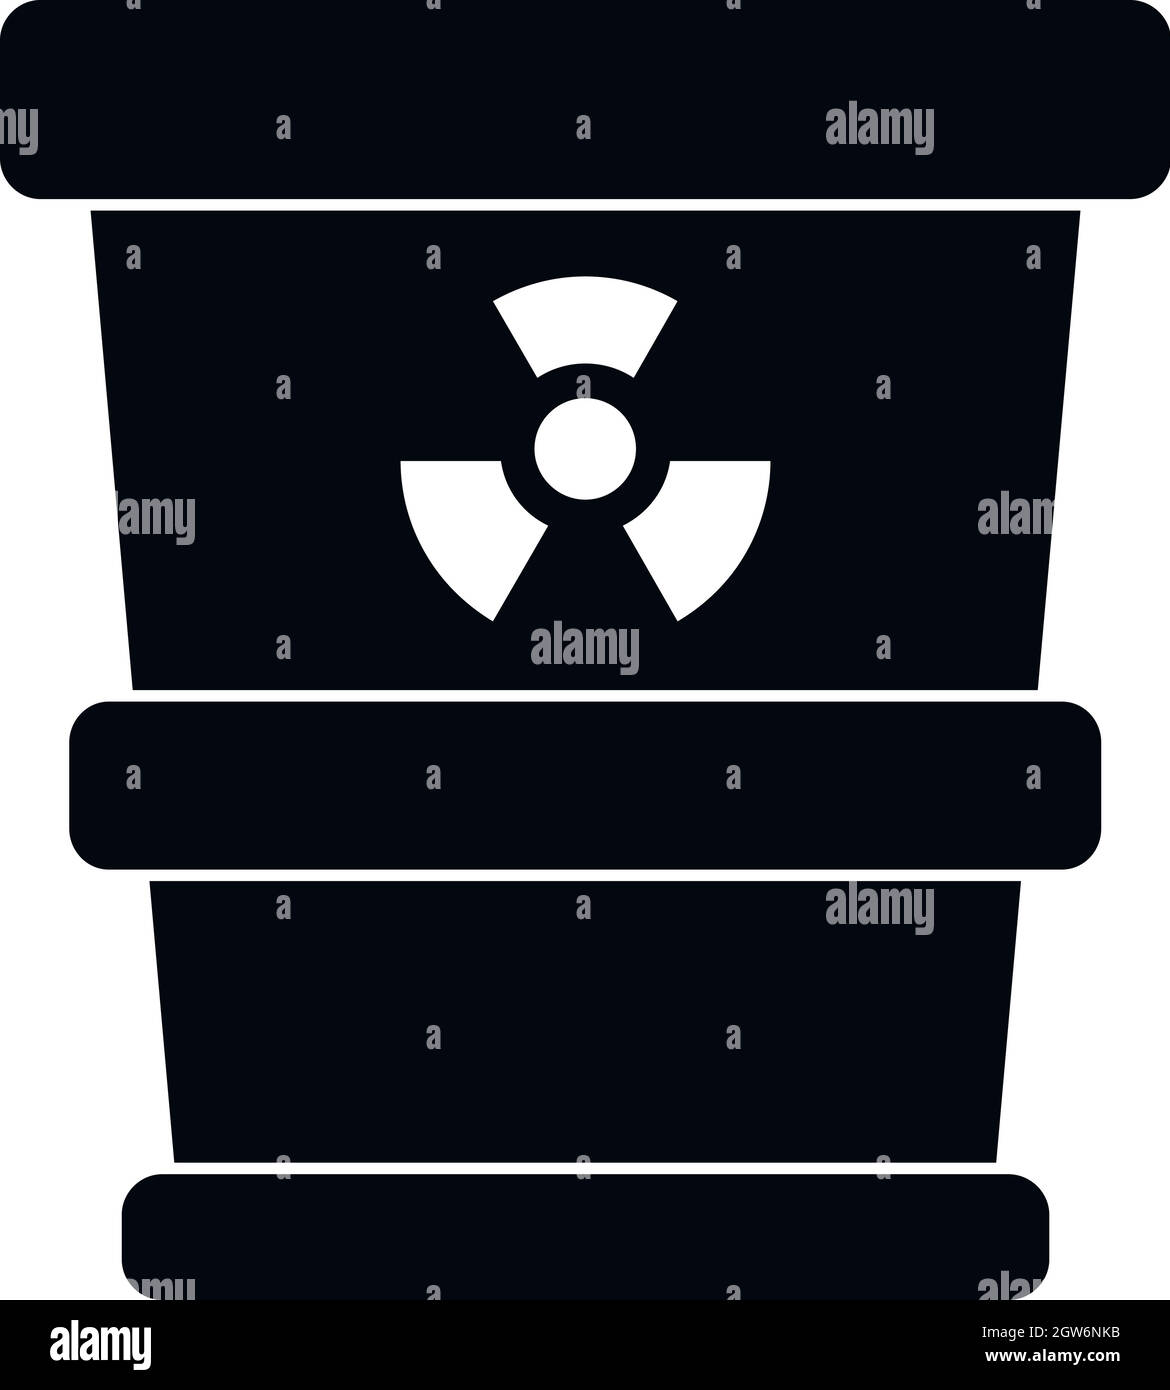 Trashcan containing radioactive waste icon Stock Vector